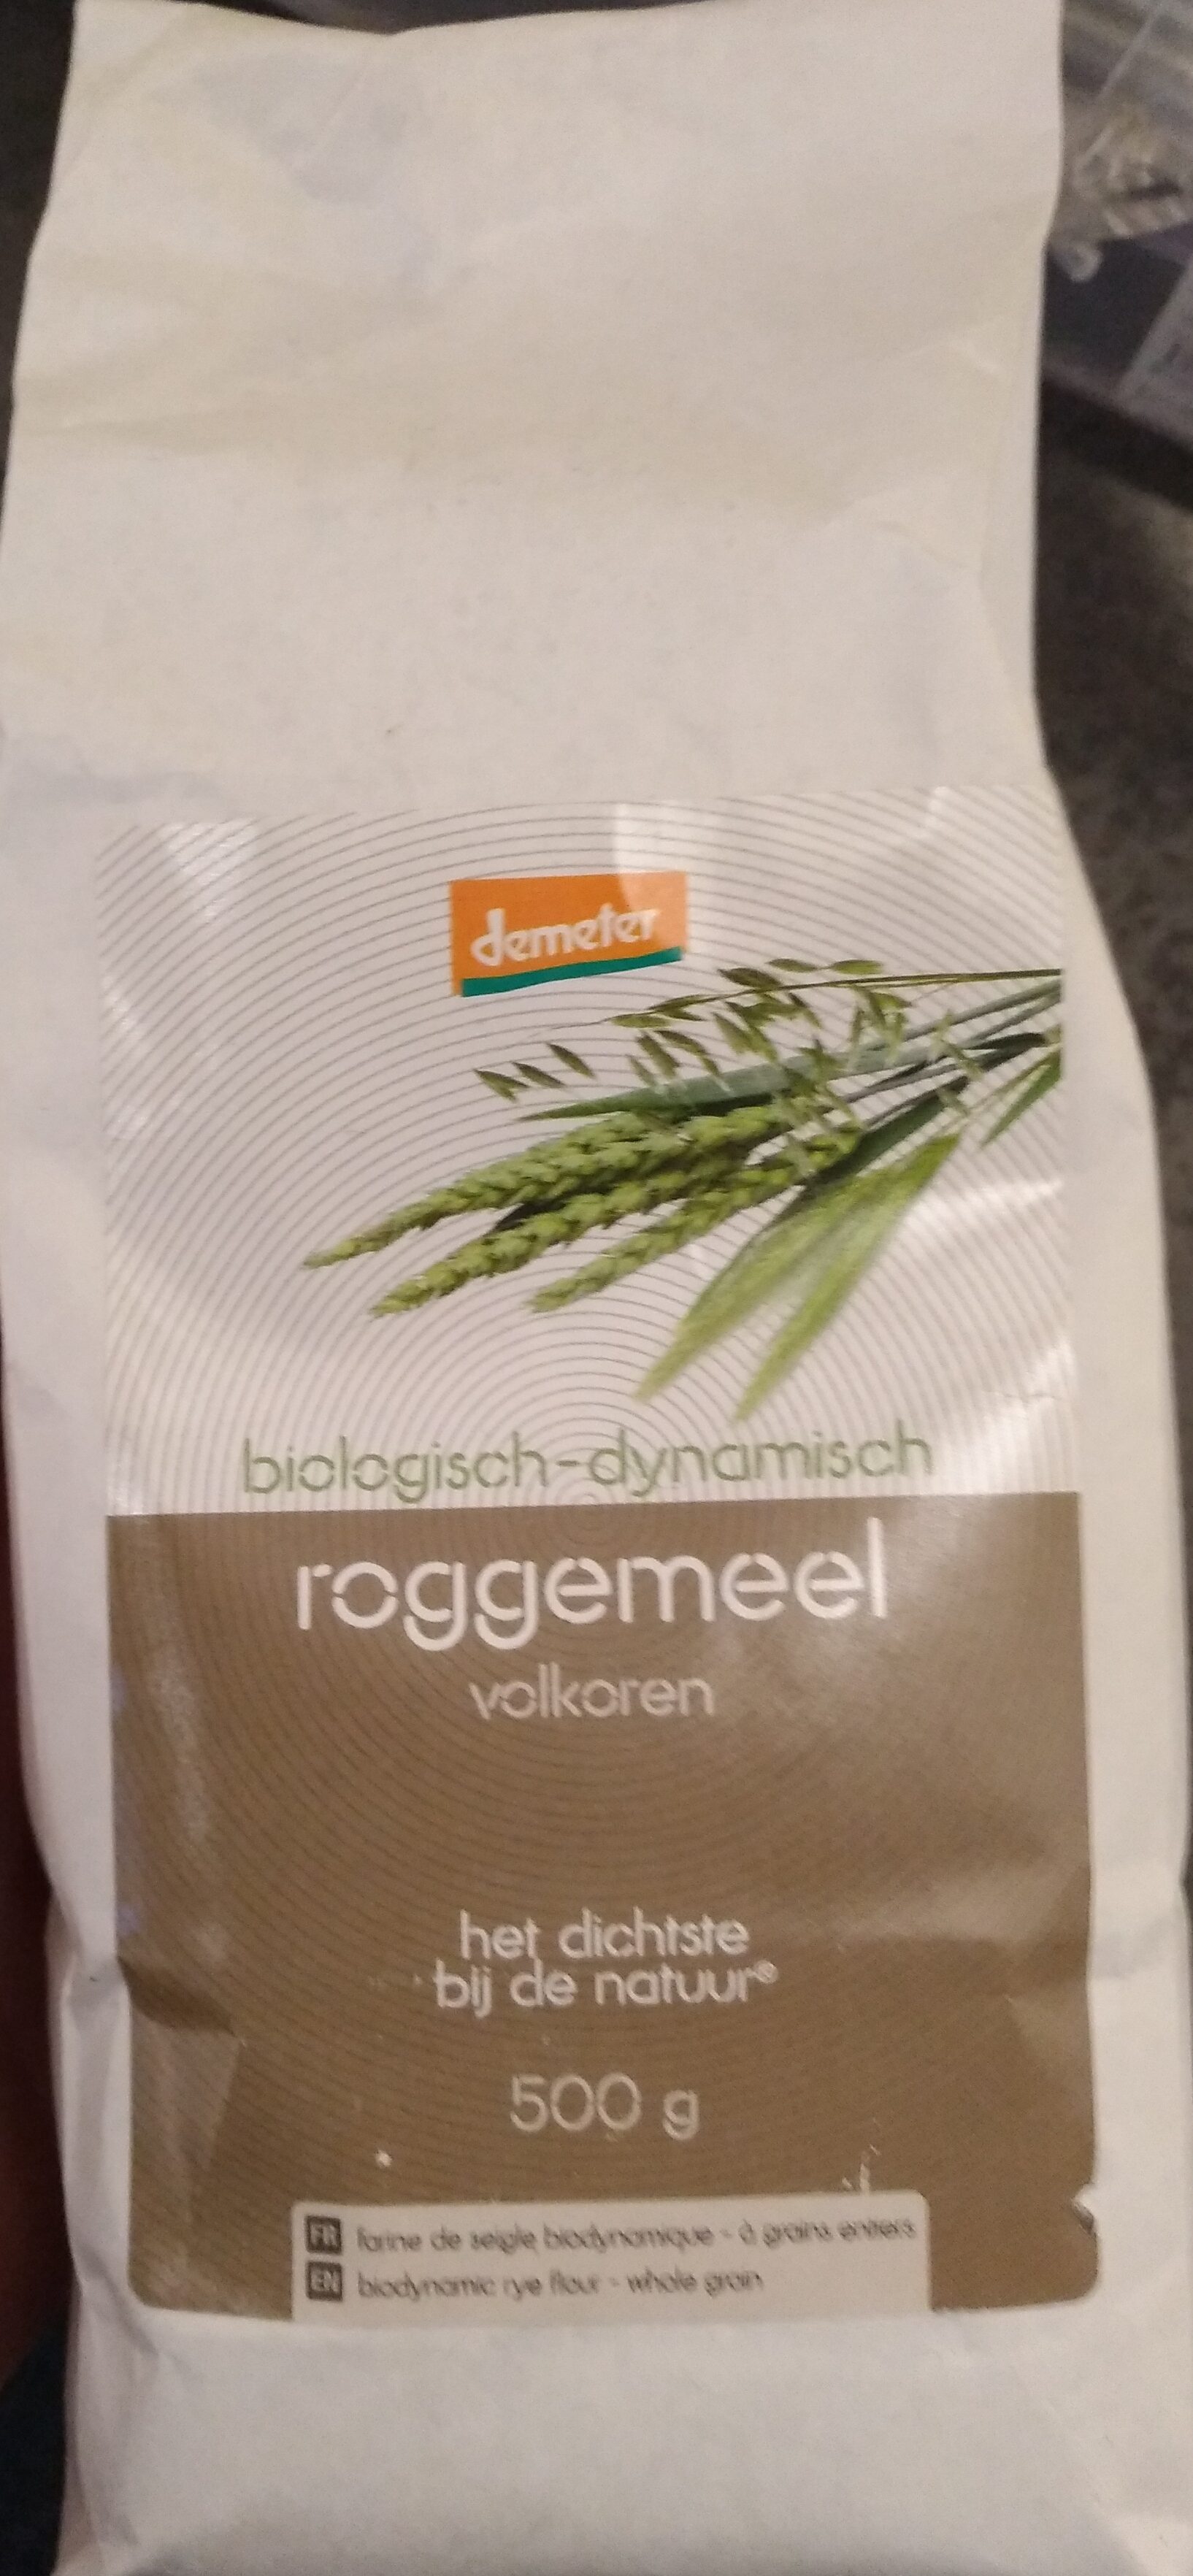 roggemeel - Product